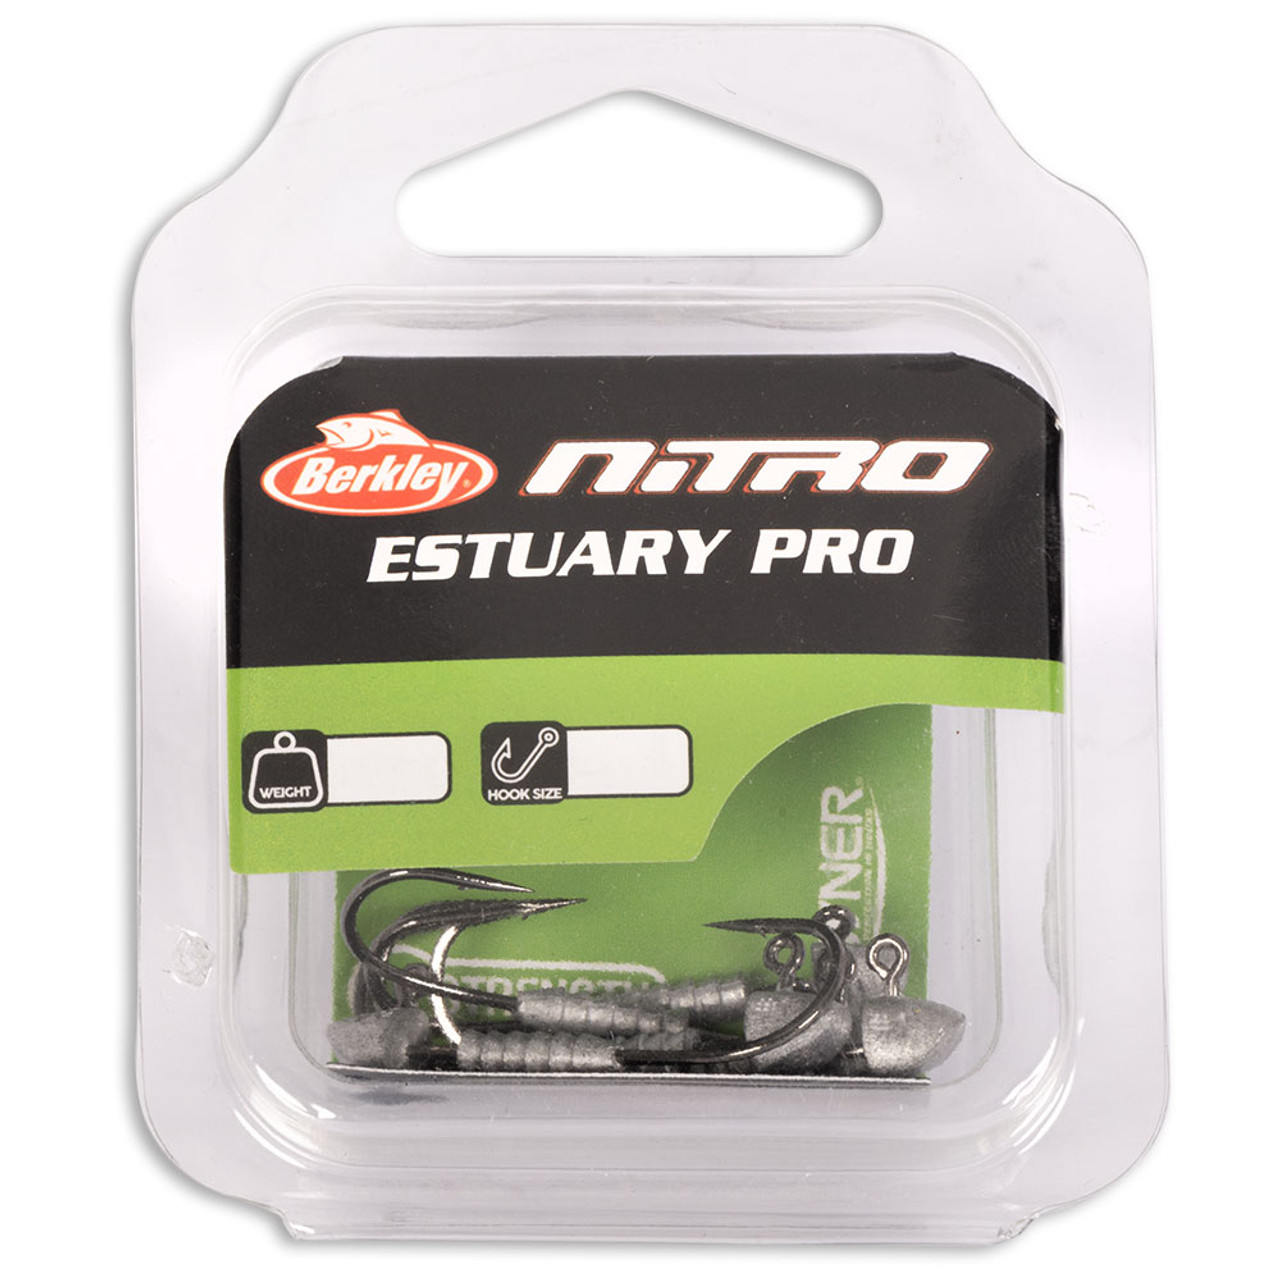 Nitro Bream Pro Jig Heads for soft plastic lures